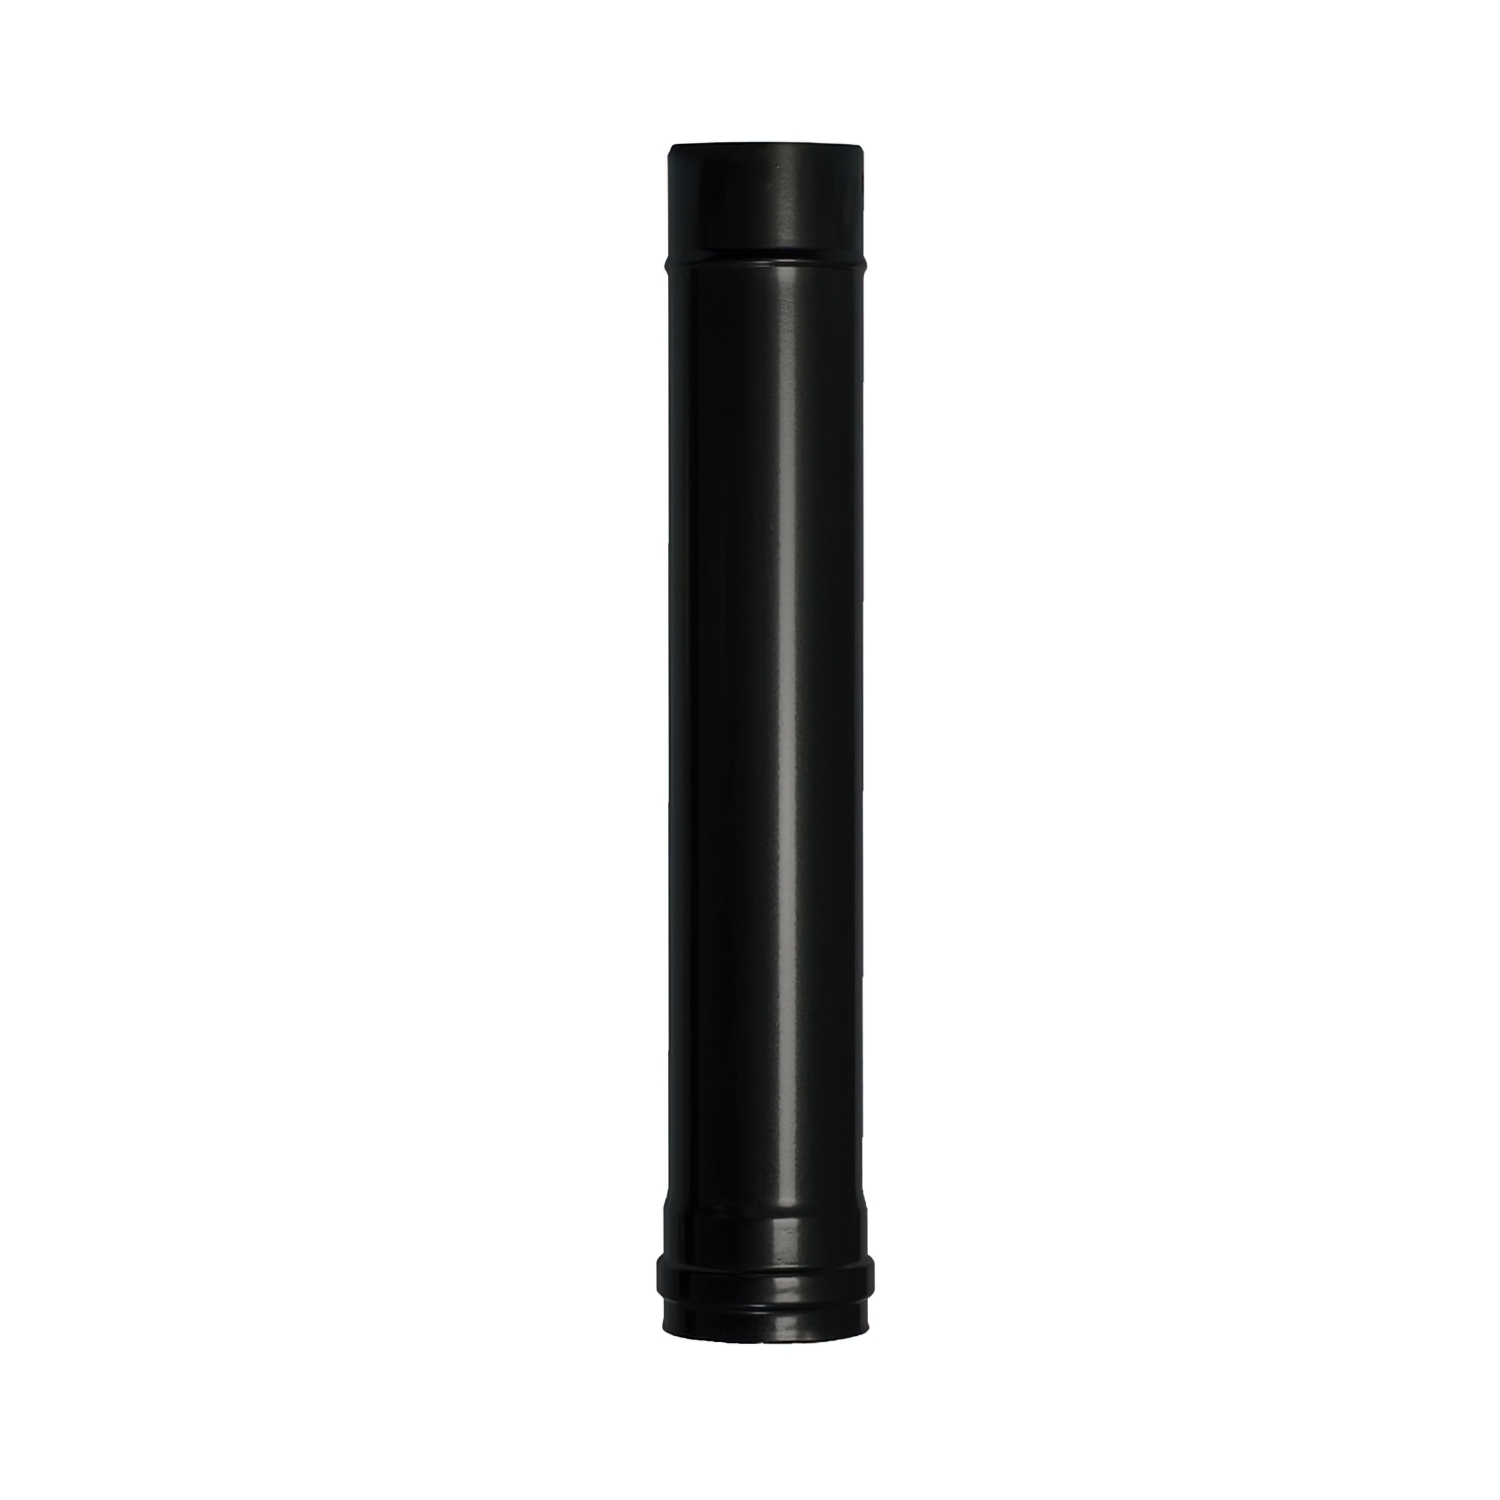 Wolfpack Tubo de Estufa Pellet Acero Vitrificado Negro Ø 80 mm. Longitud 50 cm. Estufas de Leña, Chi